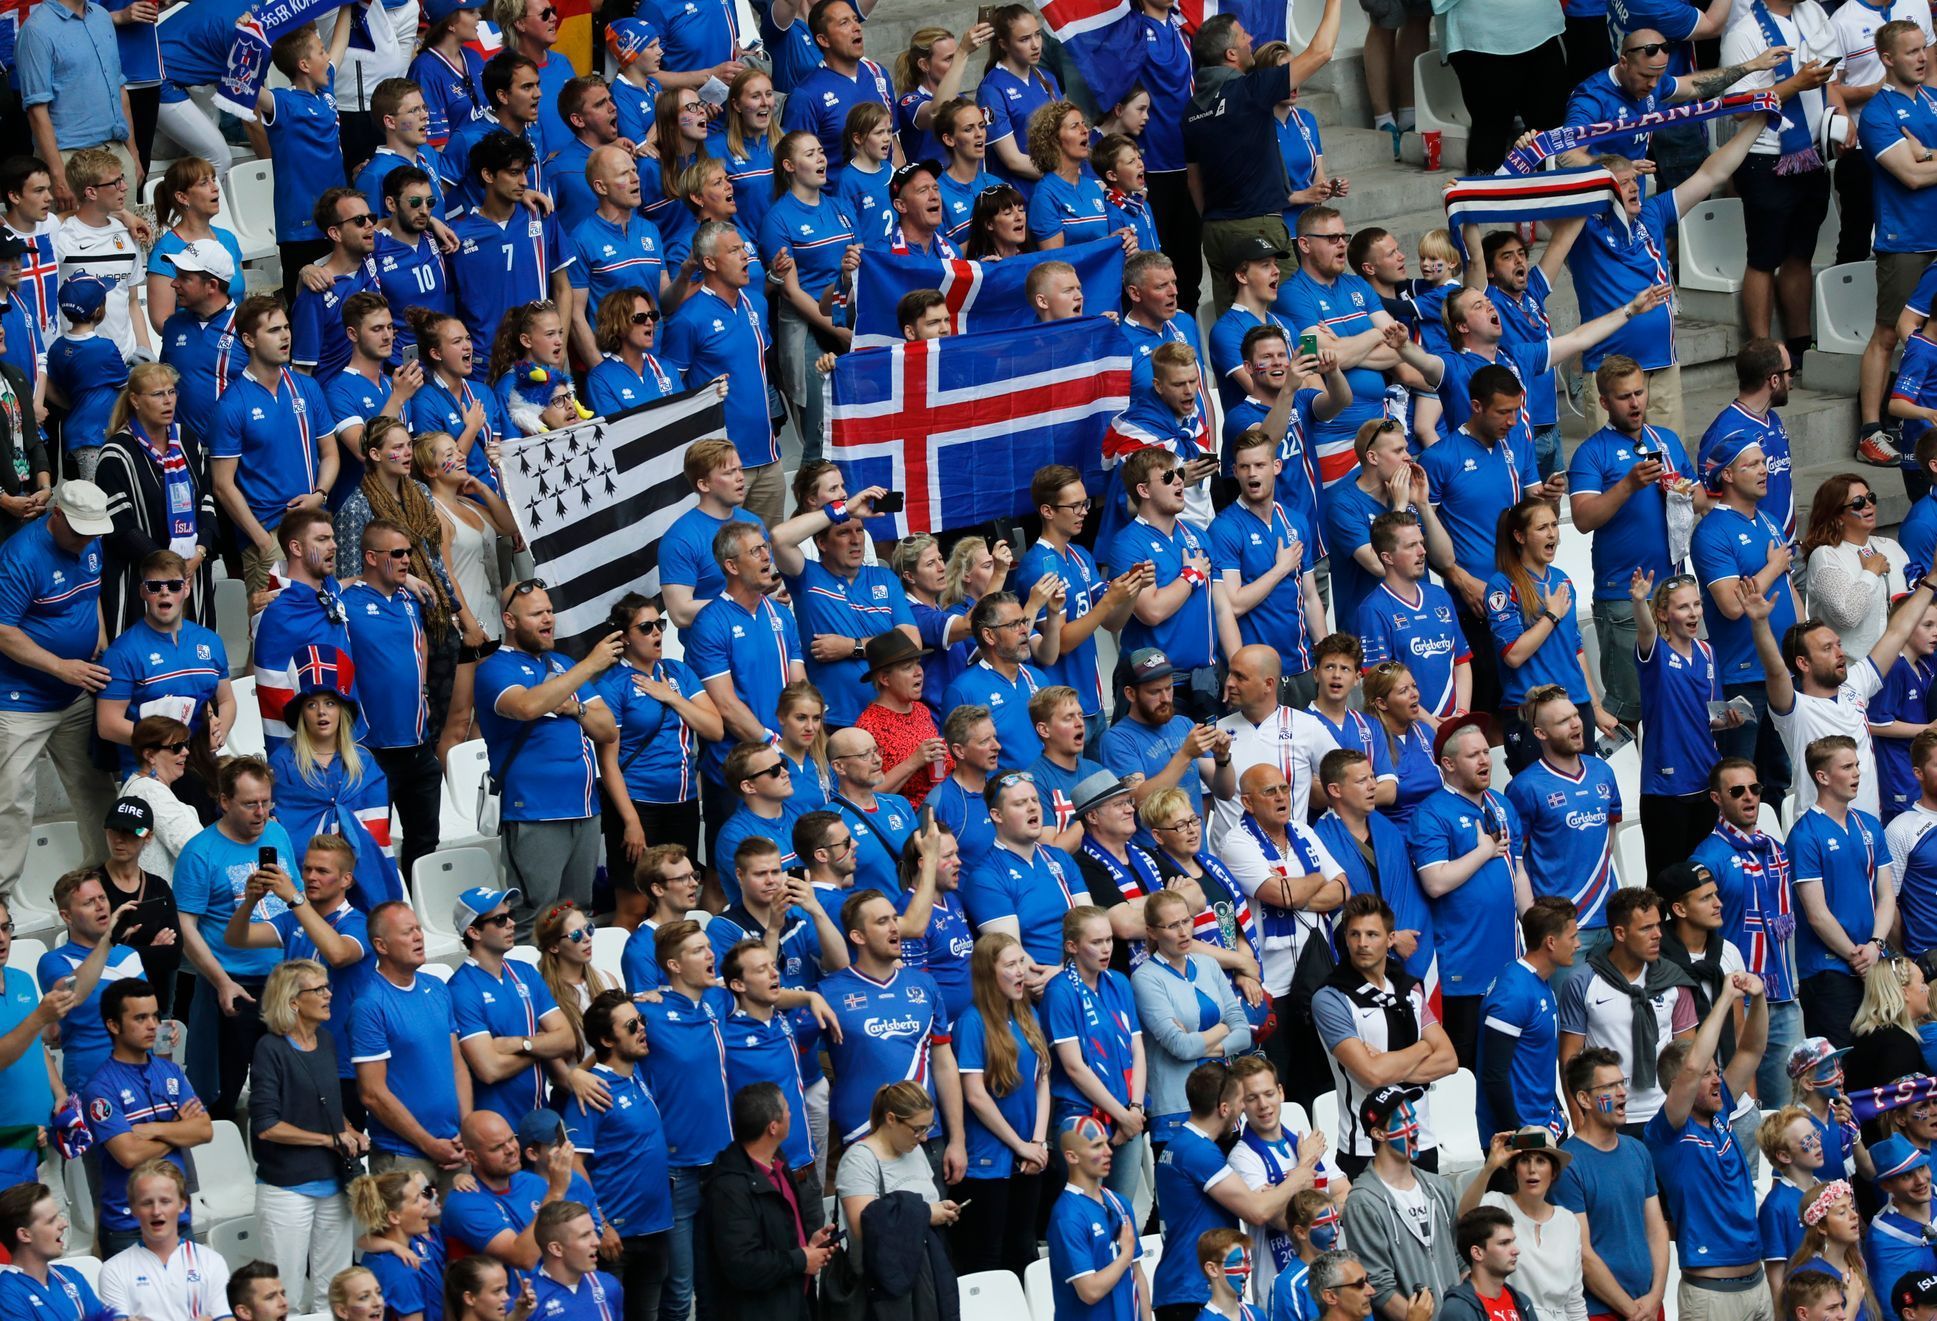 Euro 2016, Maďarsko-Island: fanoušci Islandu